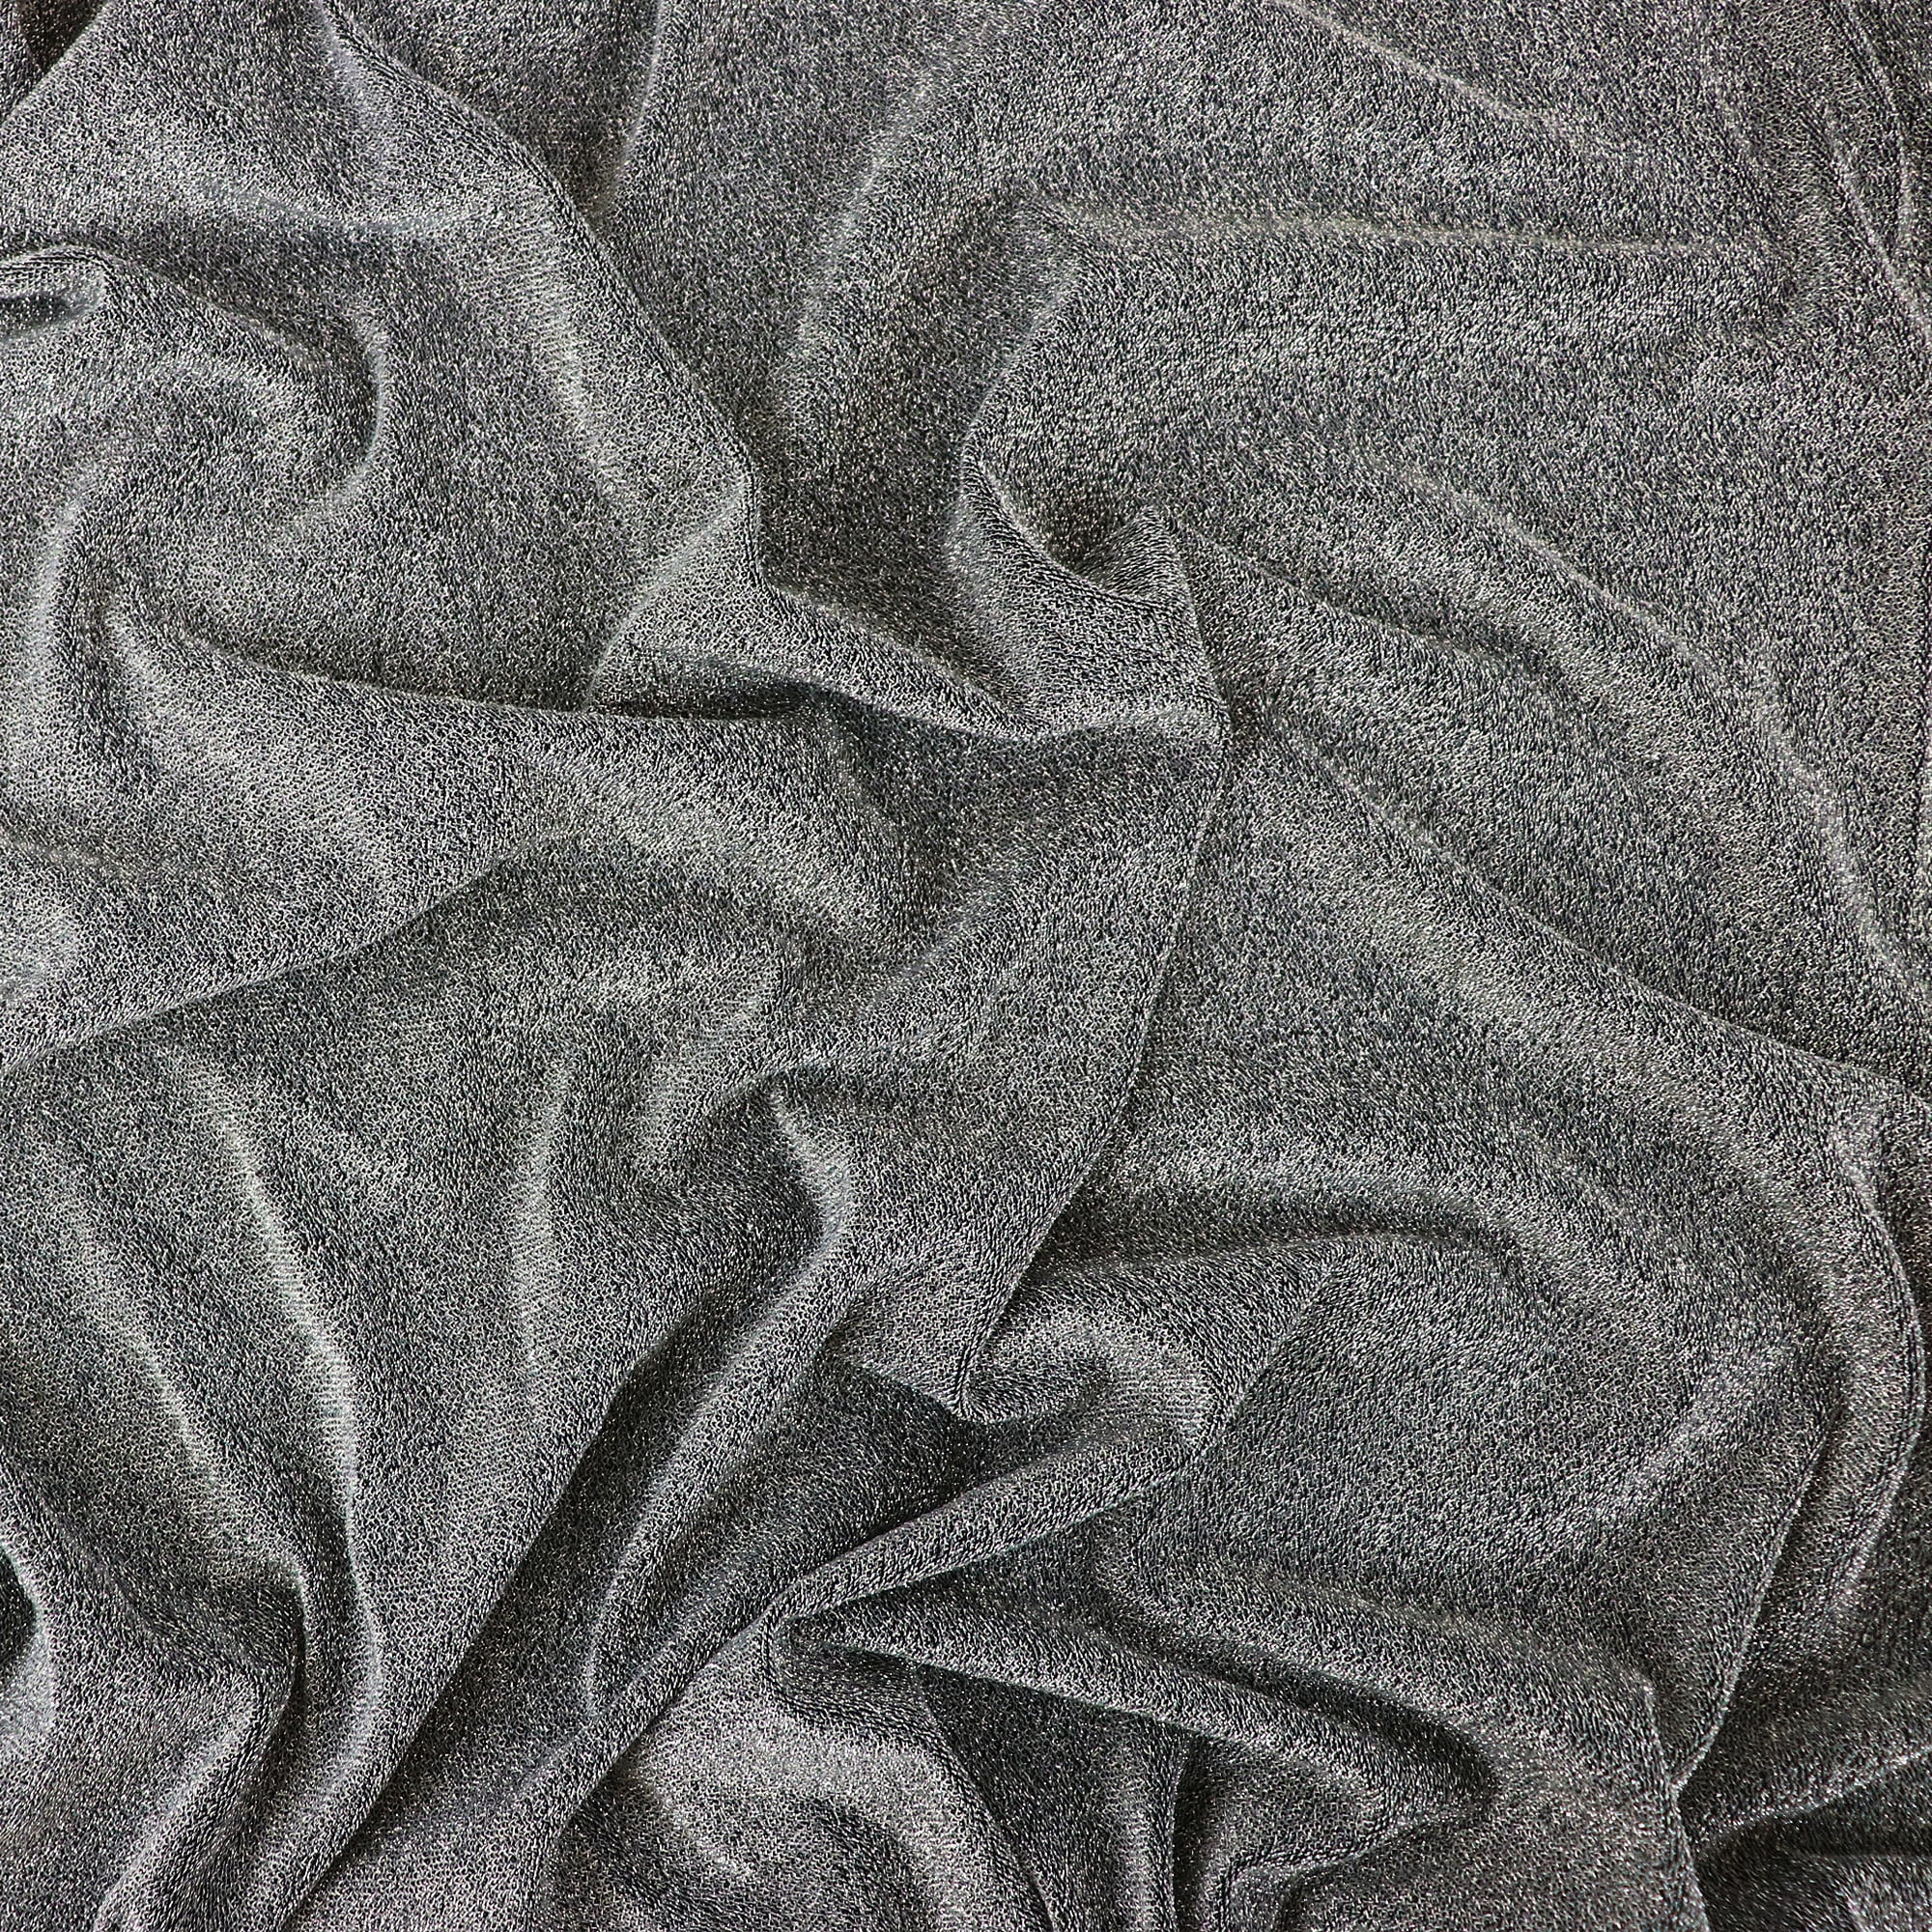 Romex Textiles Polyester Spandex Shiny Lurex Knit Fabric (3 Yards) -  Black/Gold 